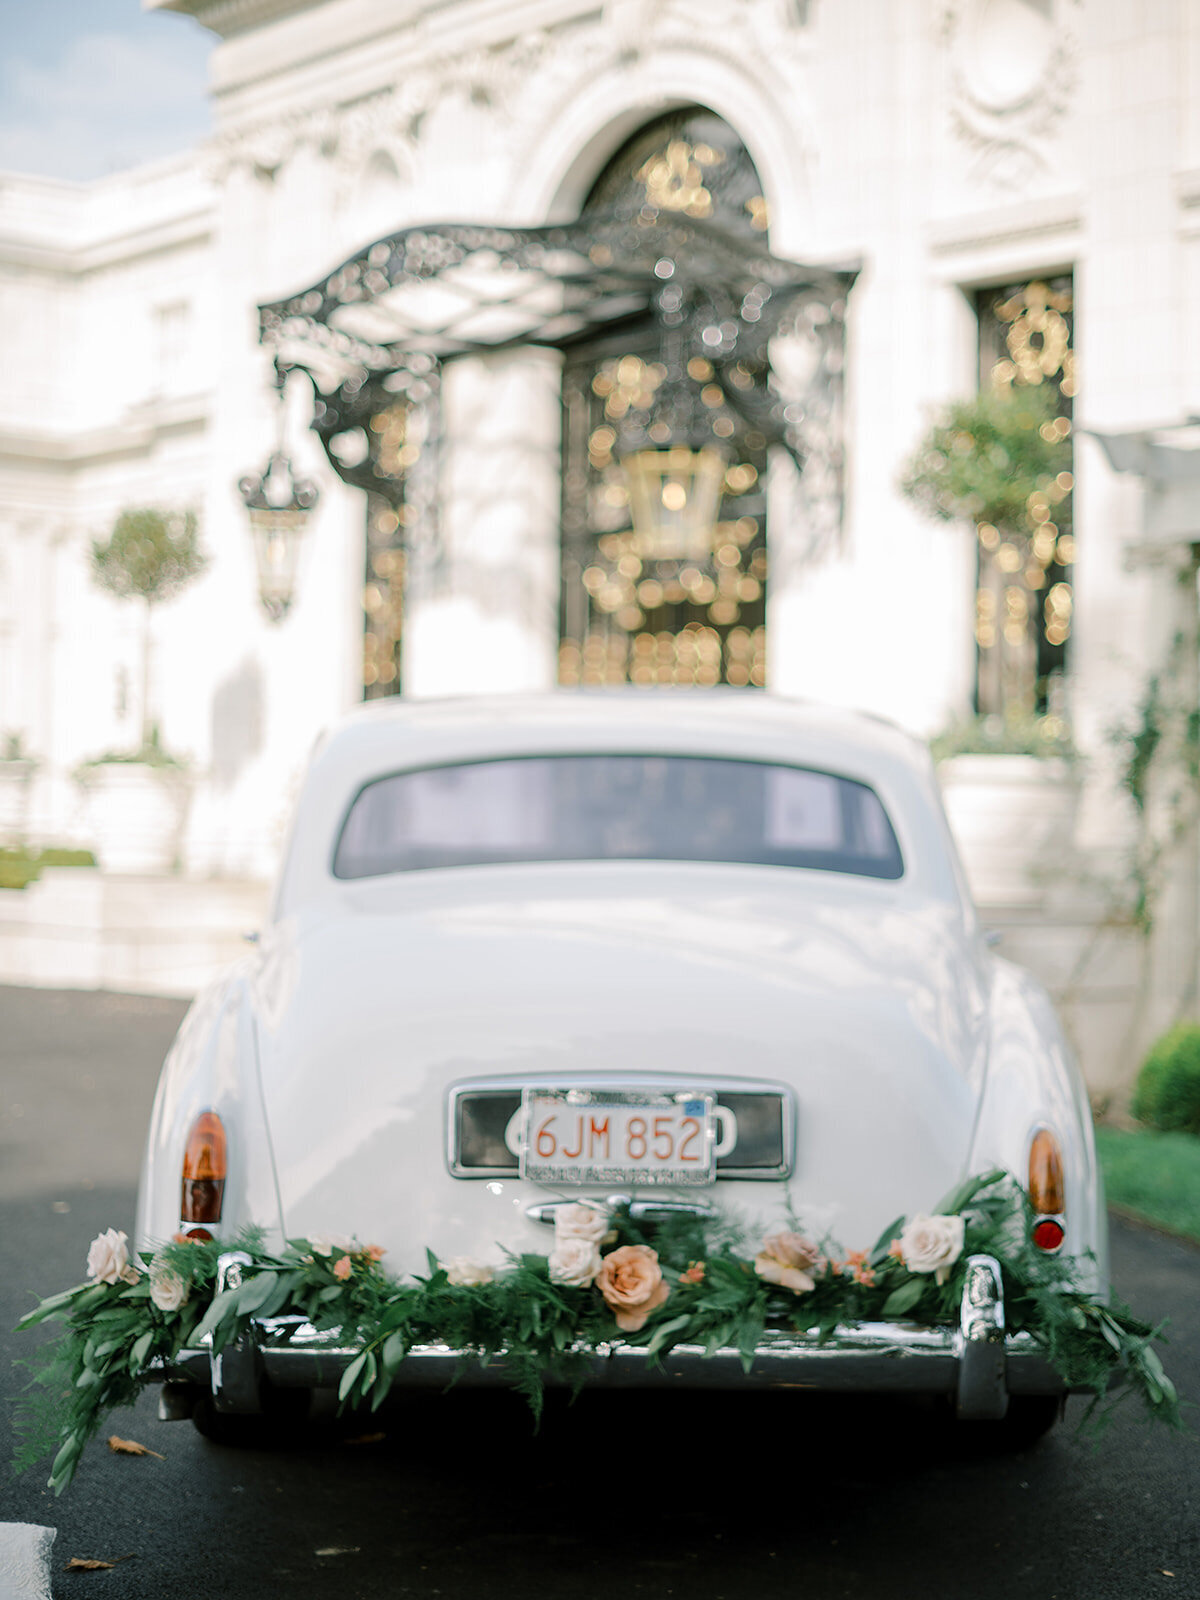 Kate_Murtaugh_Events_Newport_Rosecliff_wedding_planner_floral_getaway_car